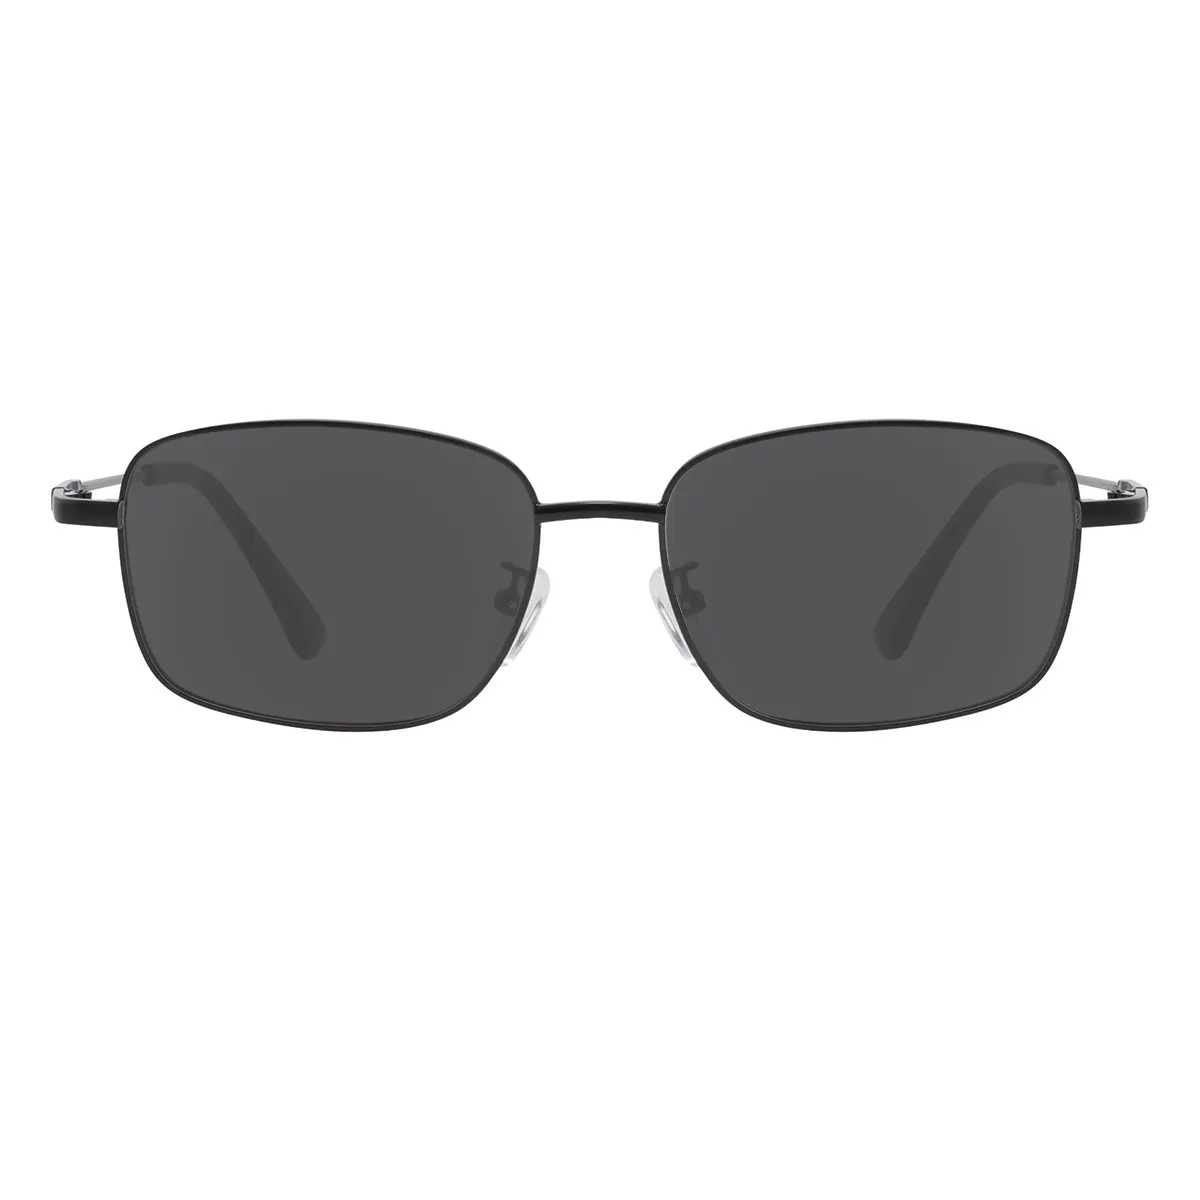 Business Square Black  Sunglasses for Men